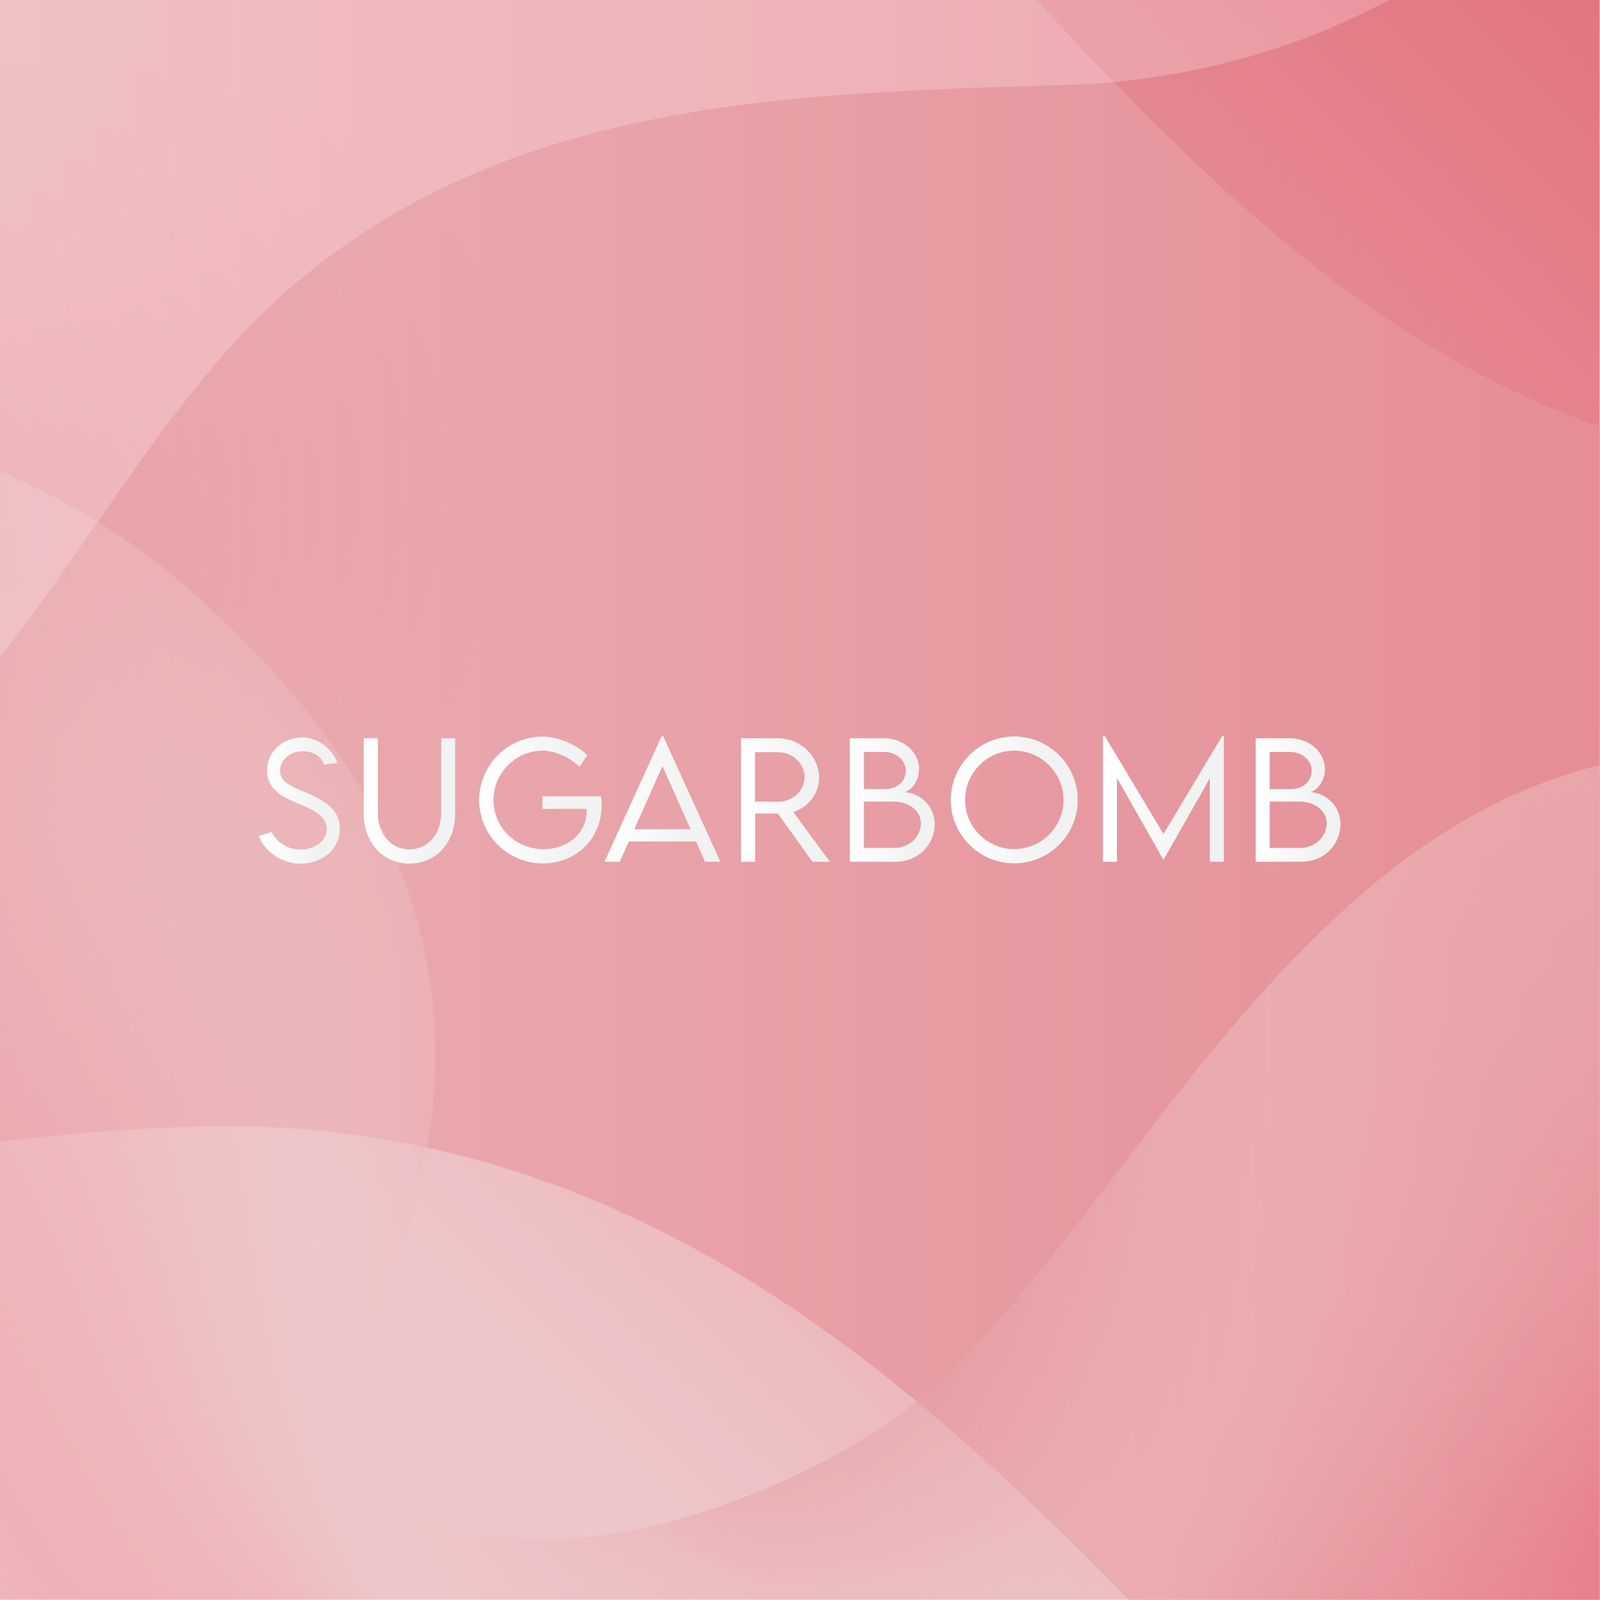 Sugarbomb Studio